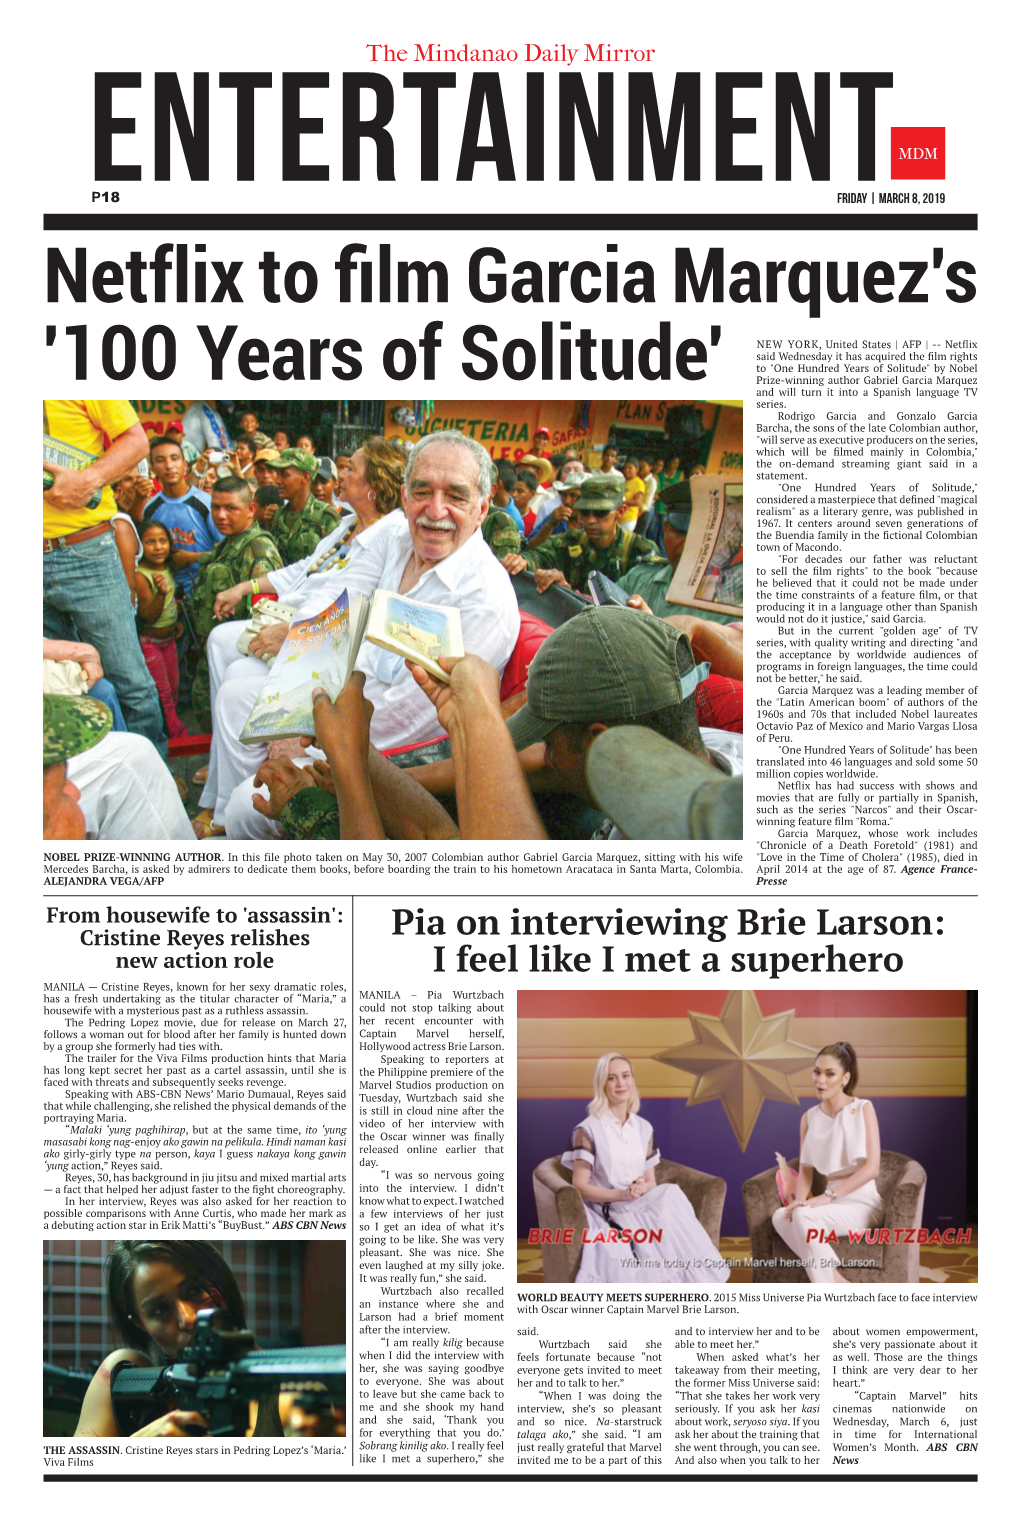 Netflix to Film Garcia Marquez's